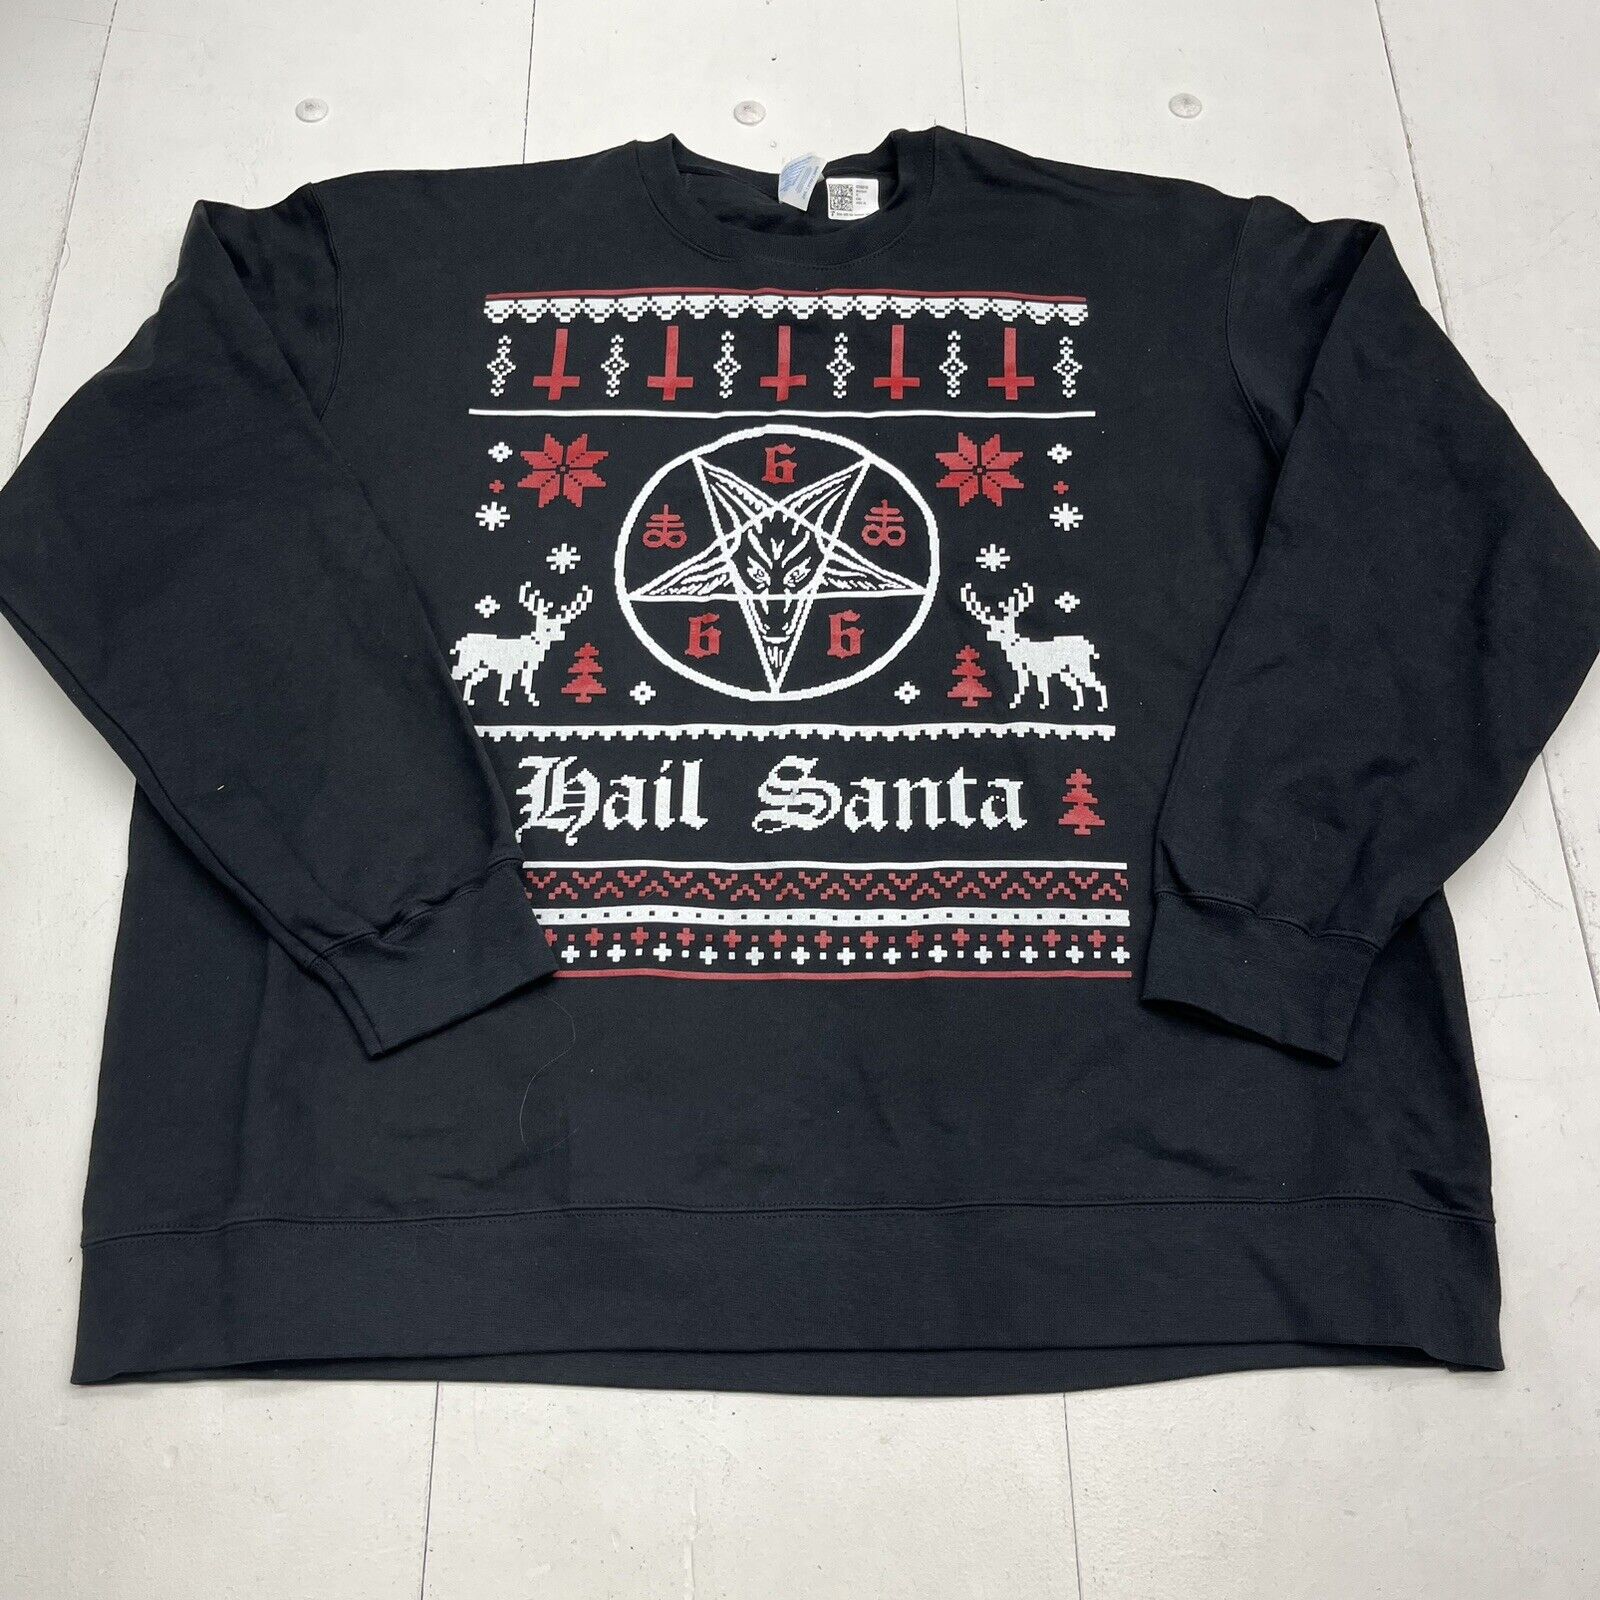 Custom Graphic Black Hail Santa Sweatshirt Unisex Adult Size 2XL NEW